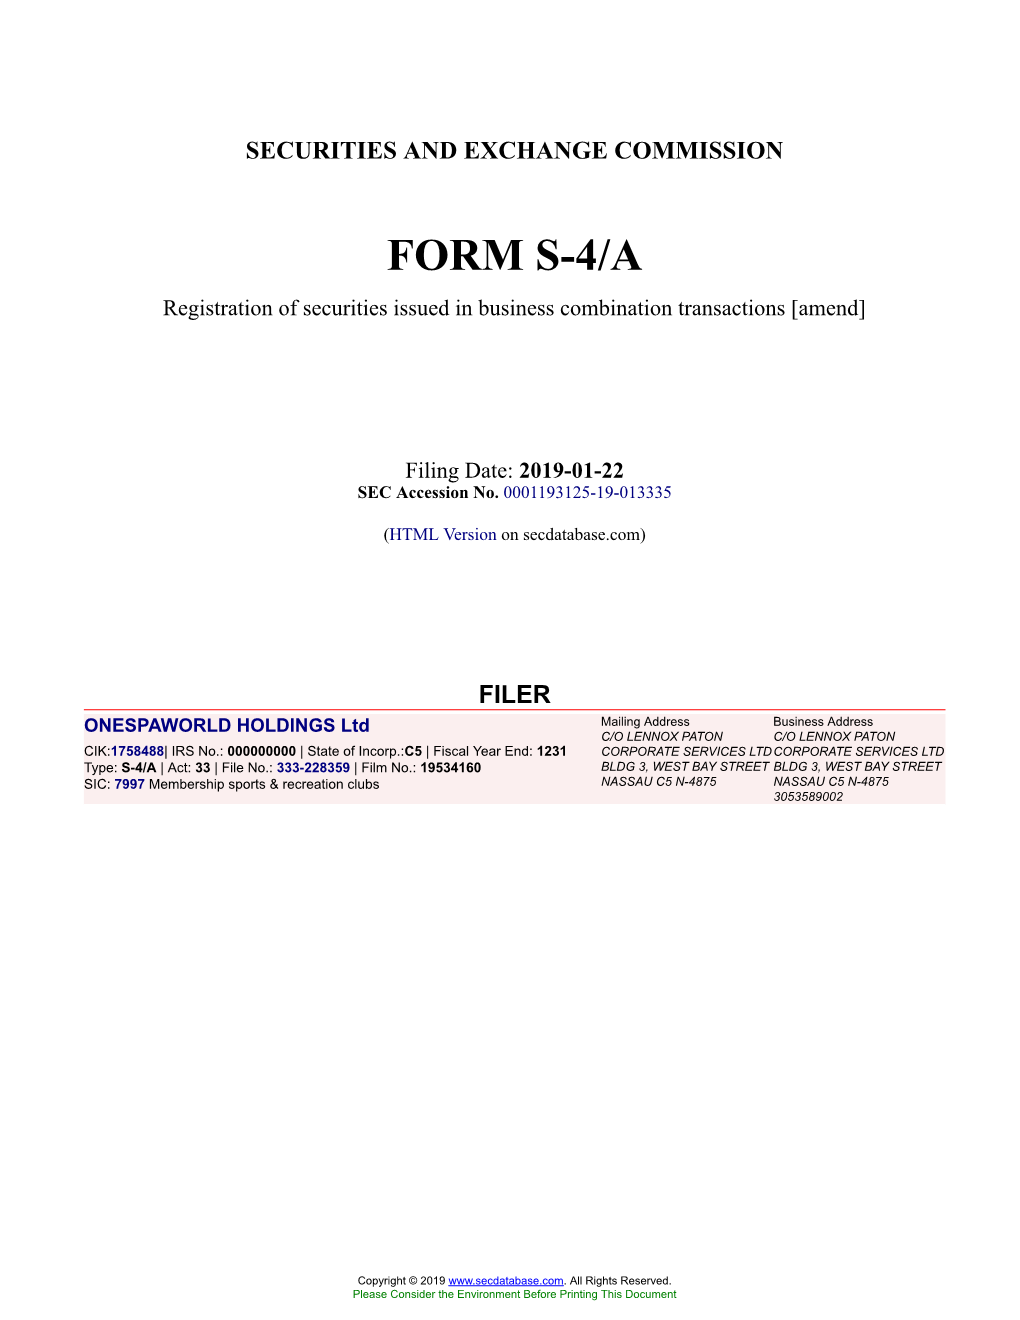 ONESPAWORLD HOLDINGS Ltd Form S-4/A Filed 2019-01-22